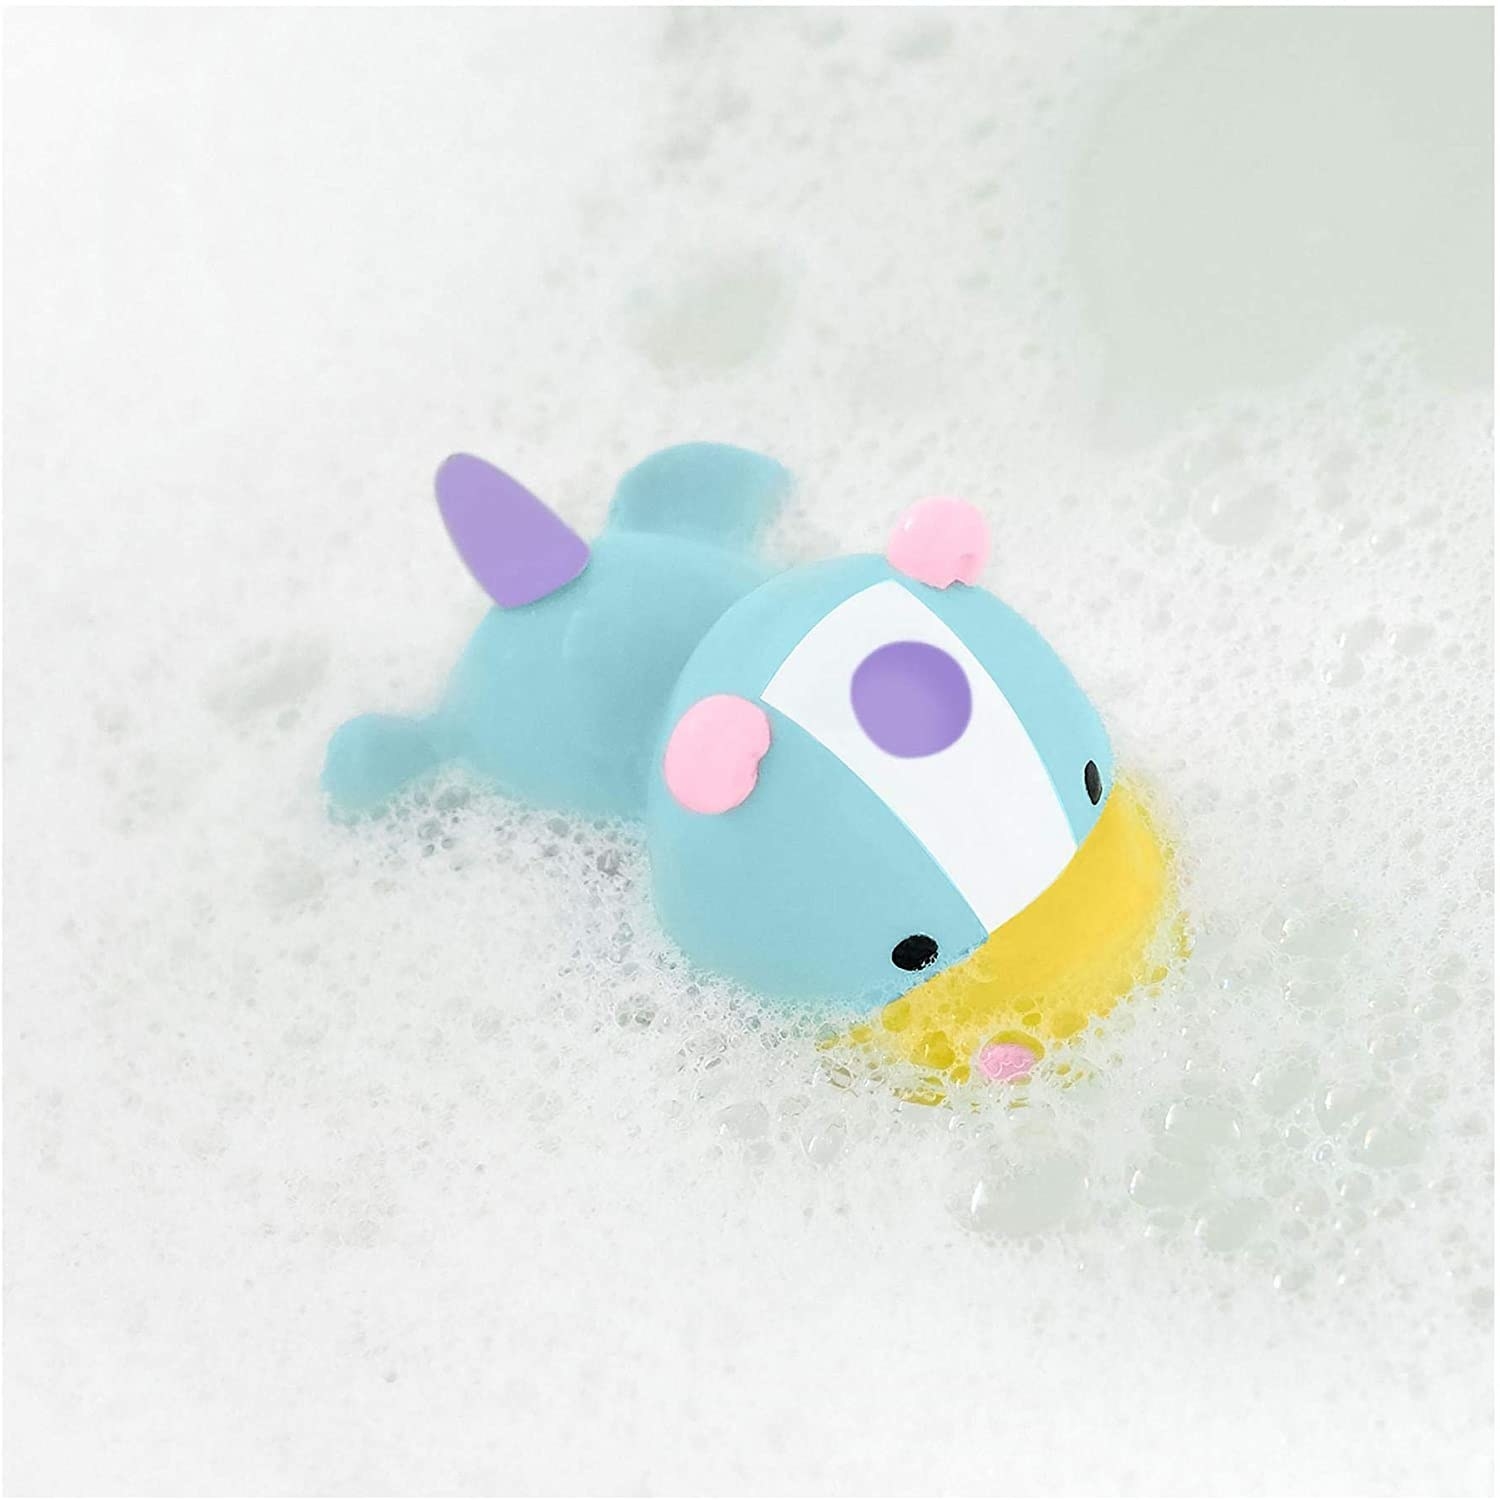 the unicorn floating in a bath